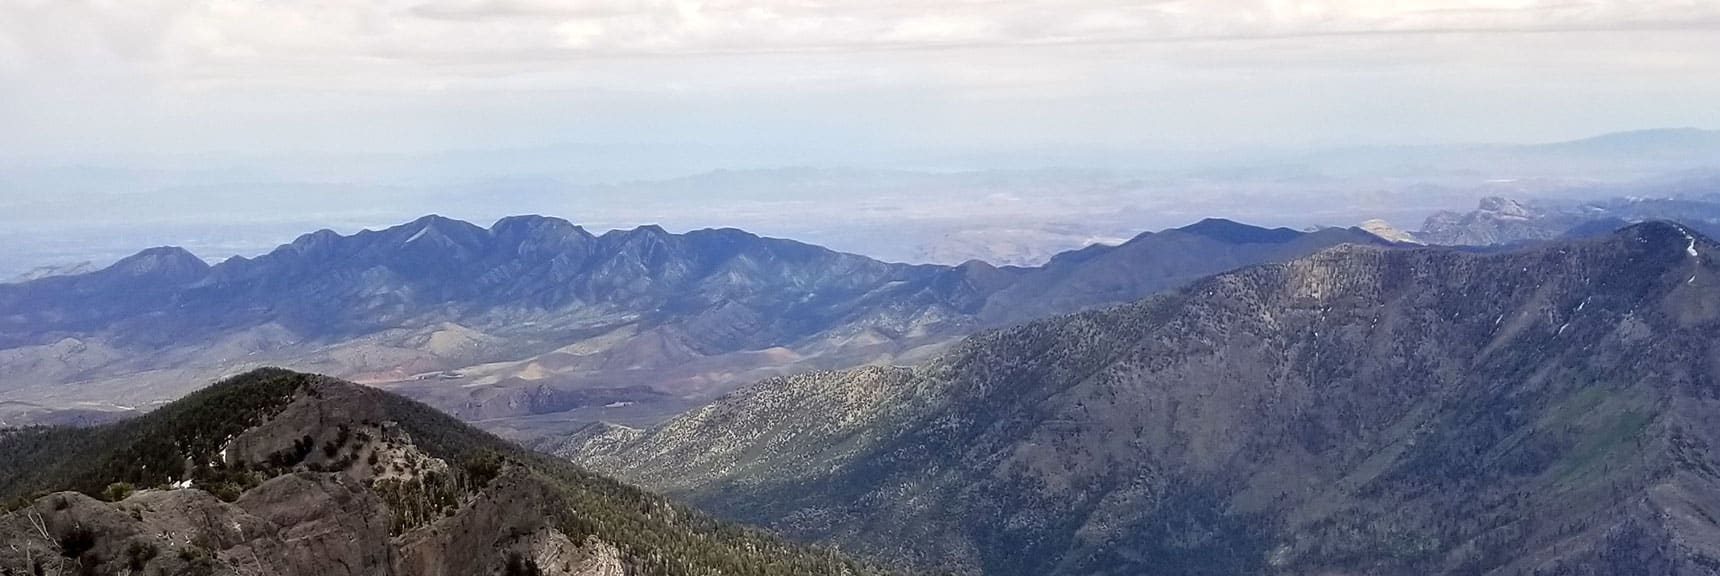 La Madre Mountain Viewed from Mummy Mt. Summit